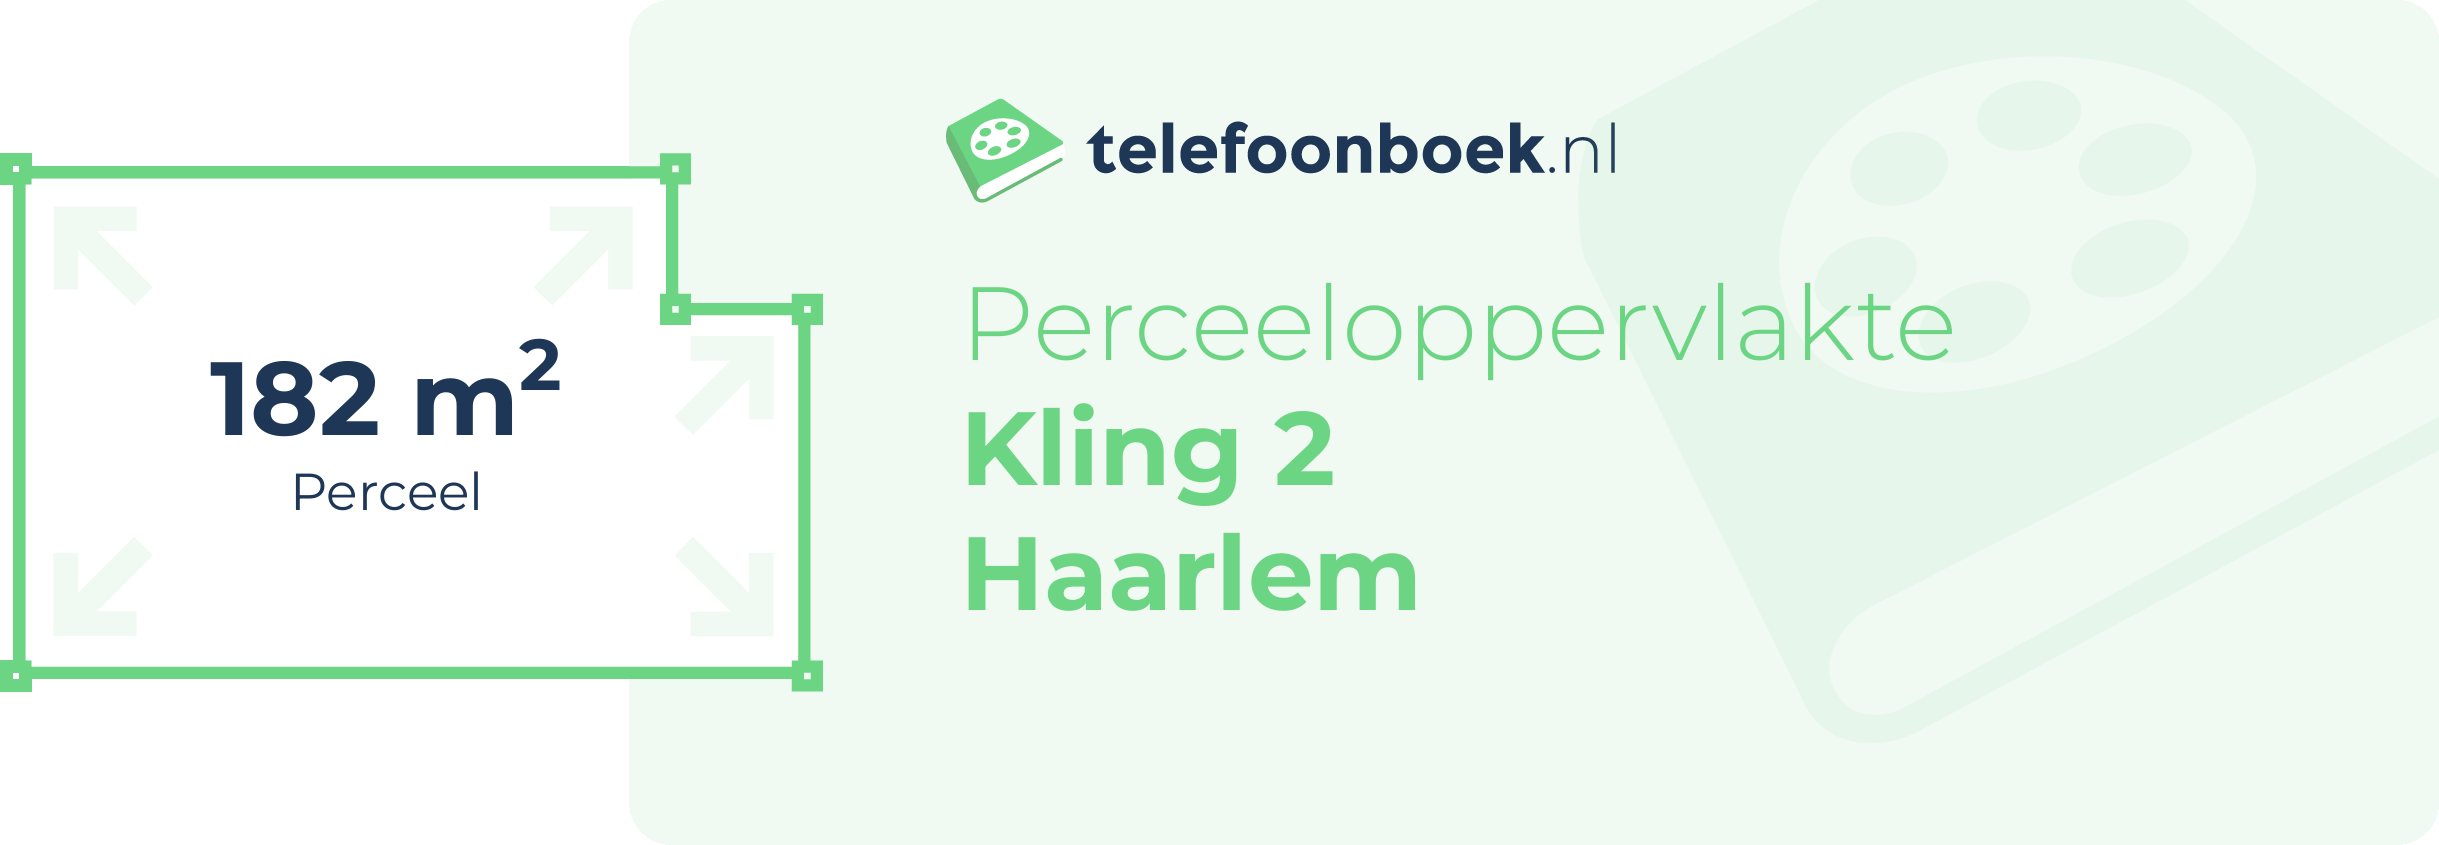 Perceeloppervlakte Kling 2 Haarlem